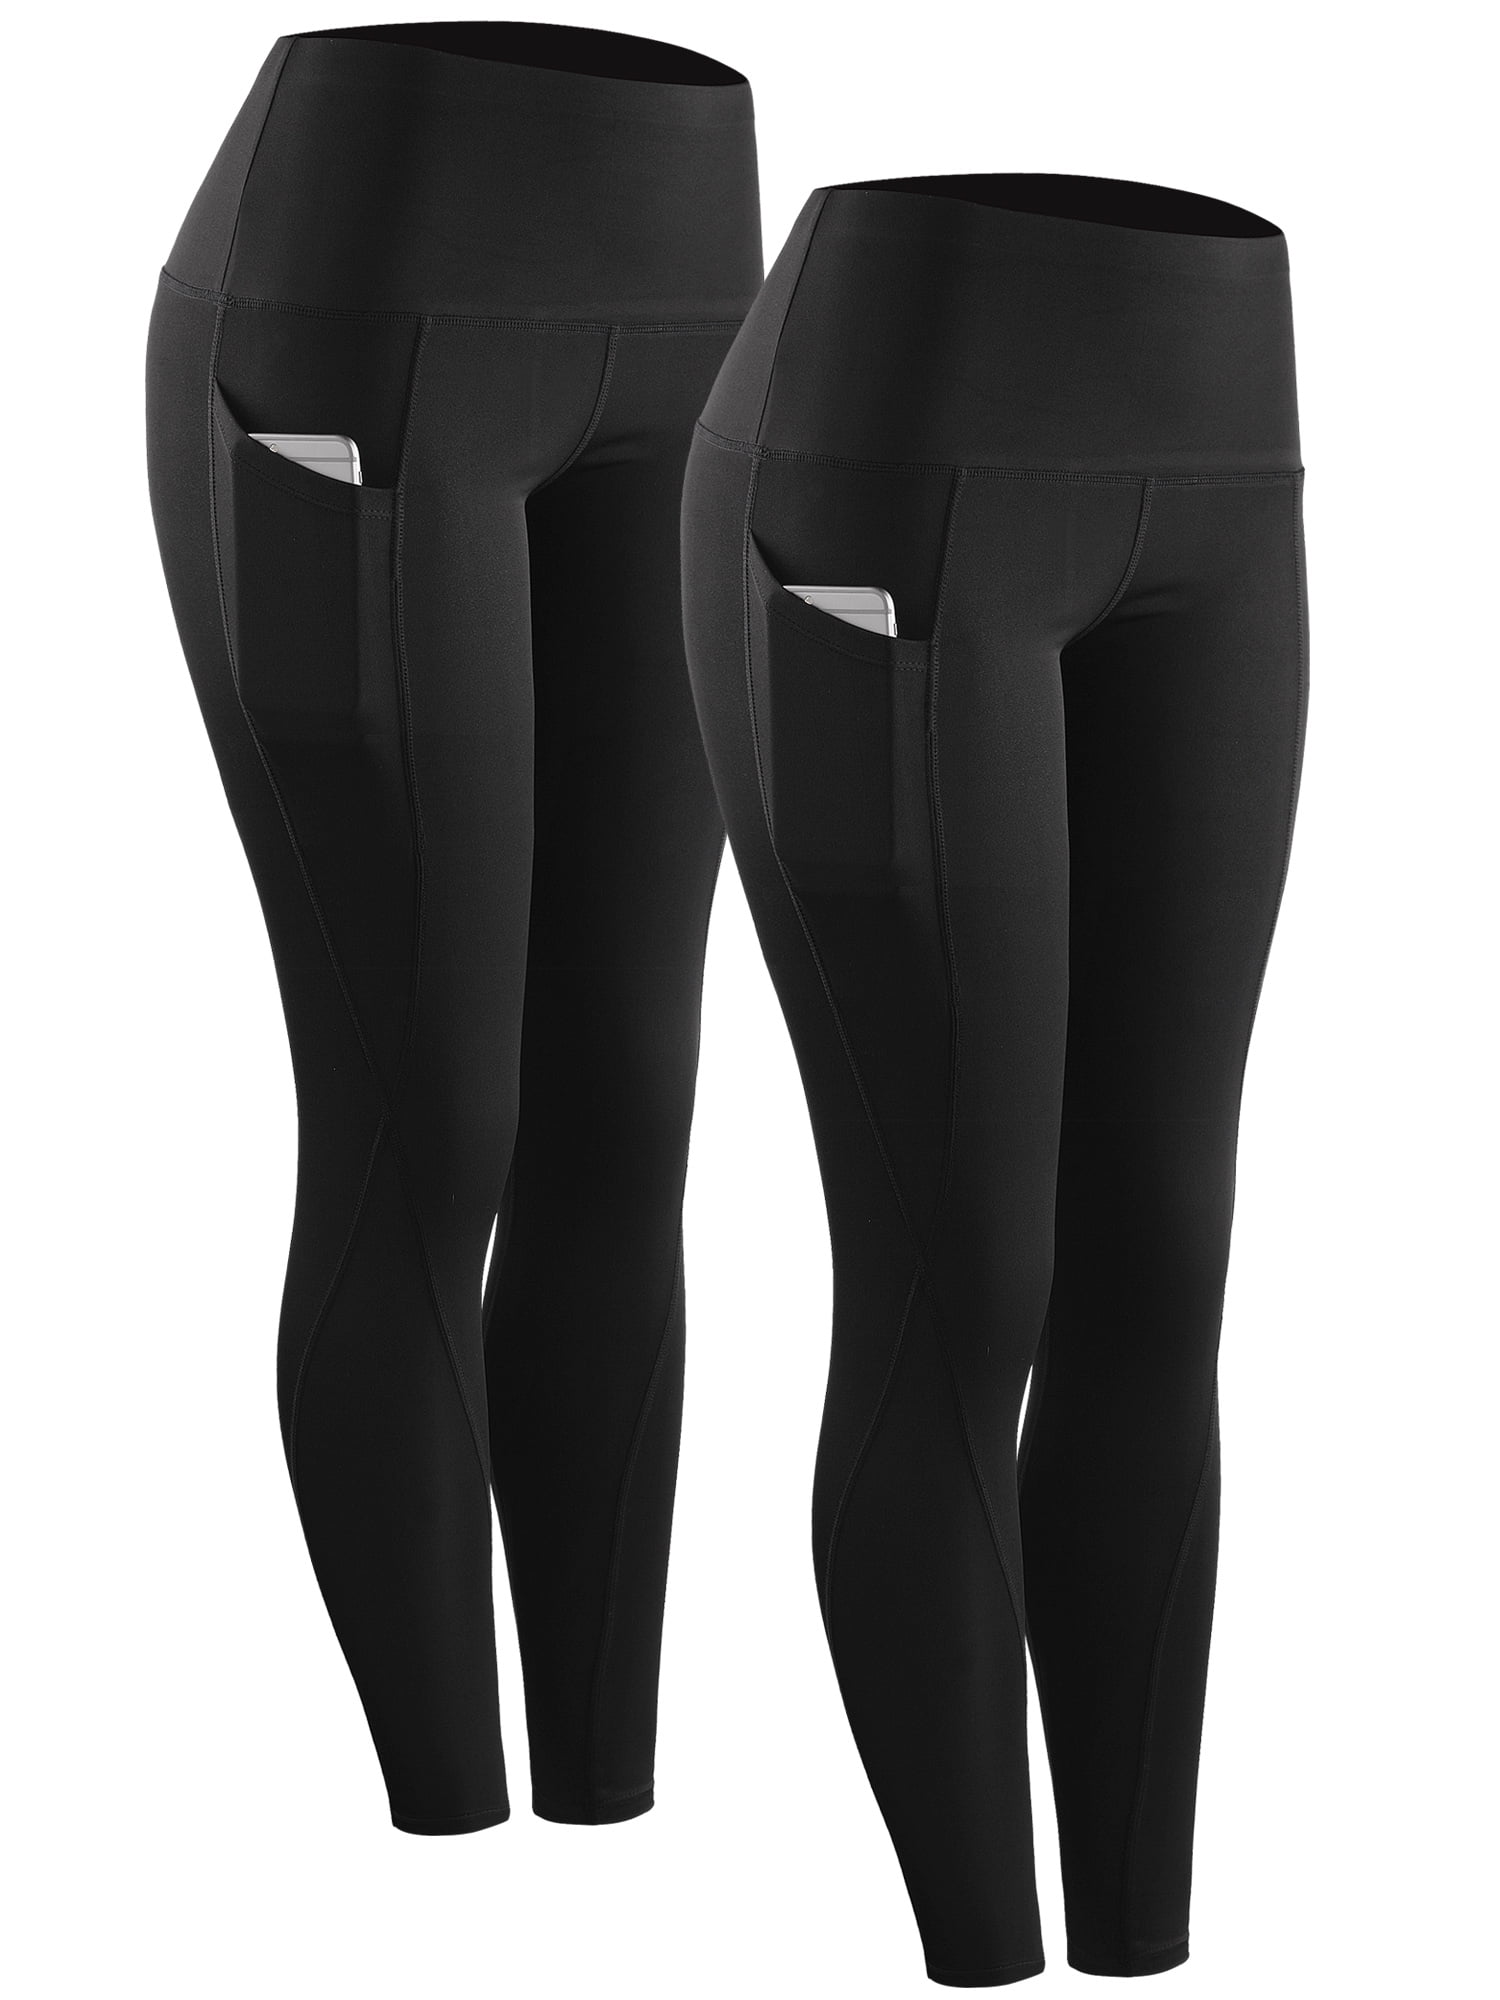 YUHAOTIN Black Leather Leggings Women'S Yoga Pants Pocket Fitness Running  Sports Elastic Pants High Waist Lifting Tight Cropped Pants Women'S Yoga  Pants Flare Pockets Stirrup Leggings Women 